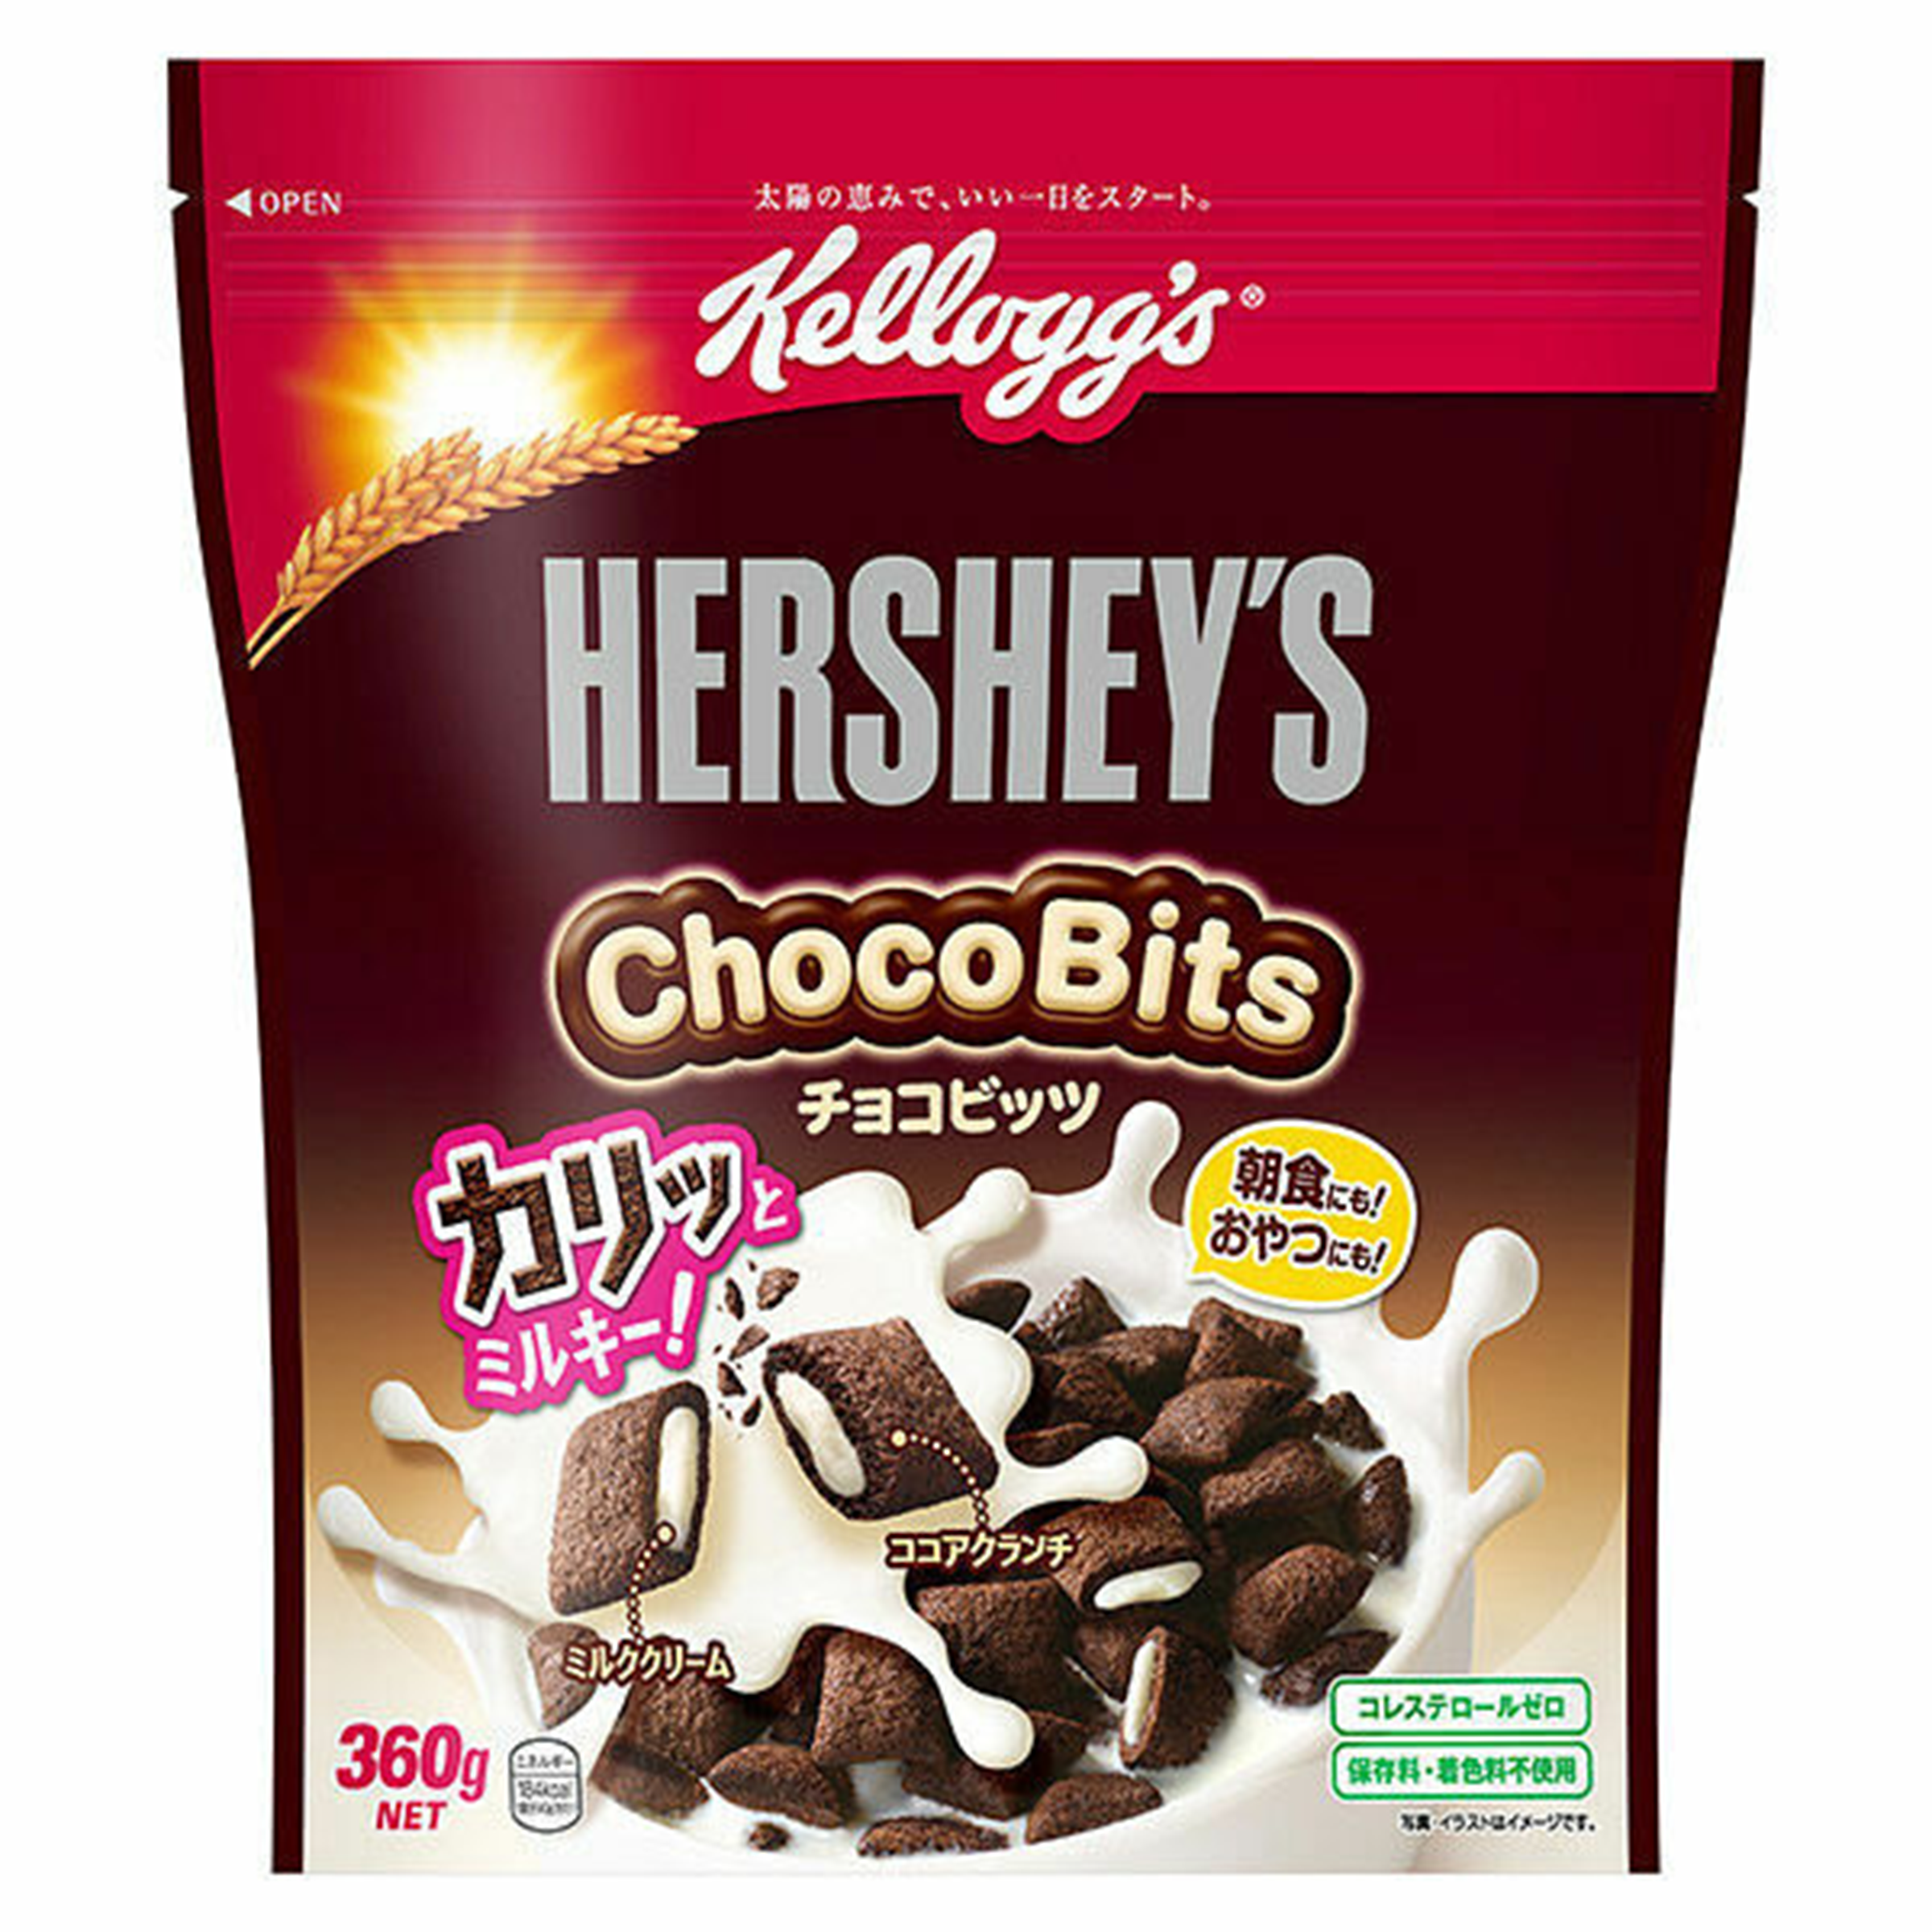 Hershey's Choco Bits Cereal - Japan